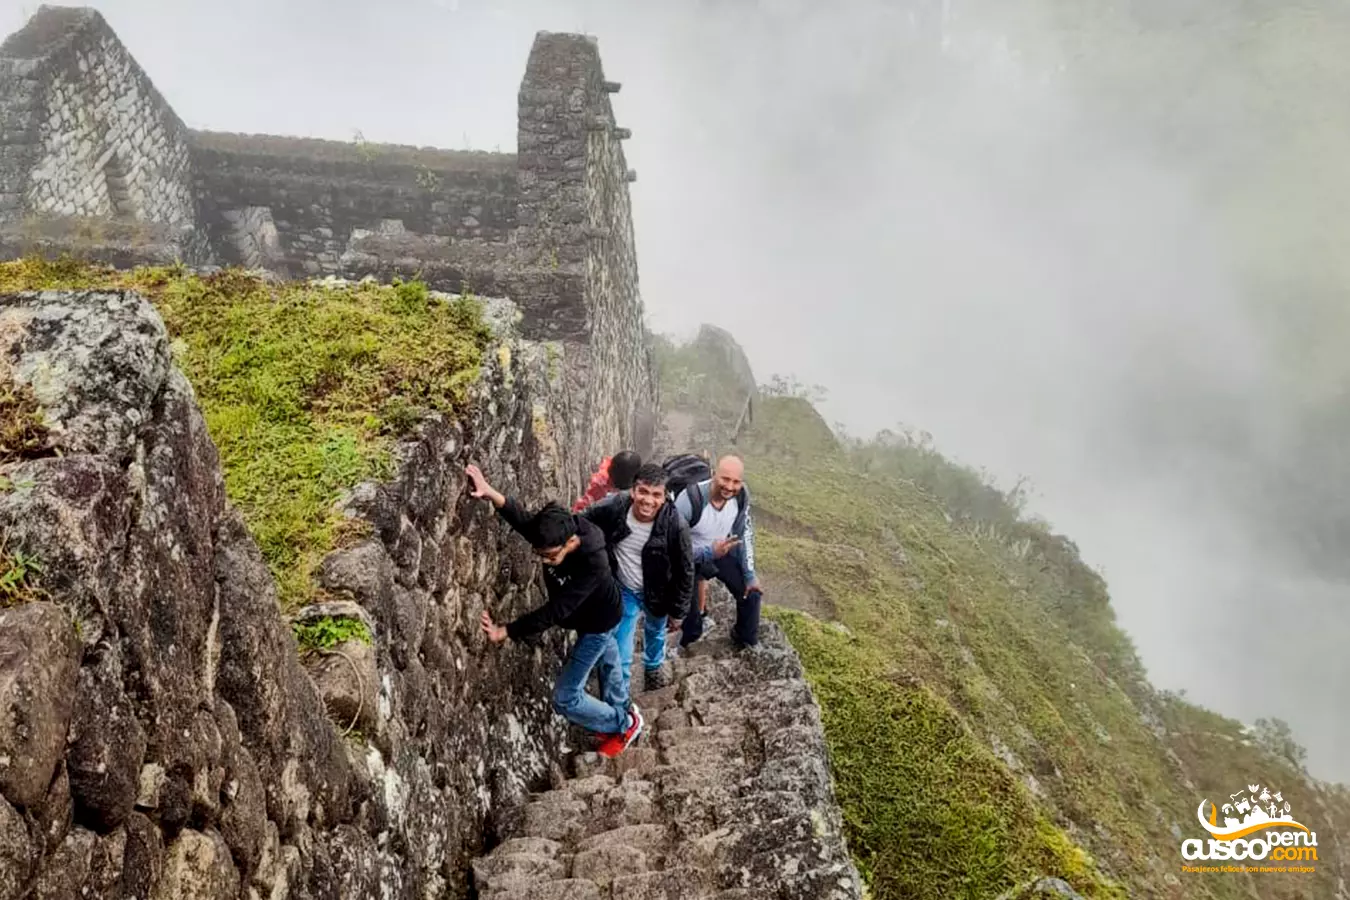 Pathway leading up to Huayna Picchu mountain.
Source: CuscoPeru.Com